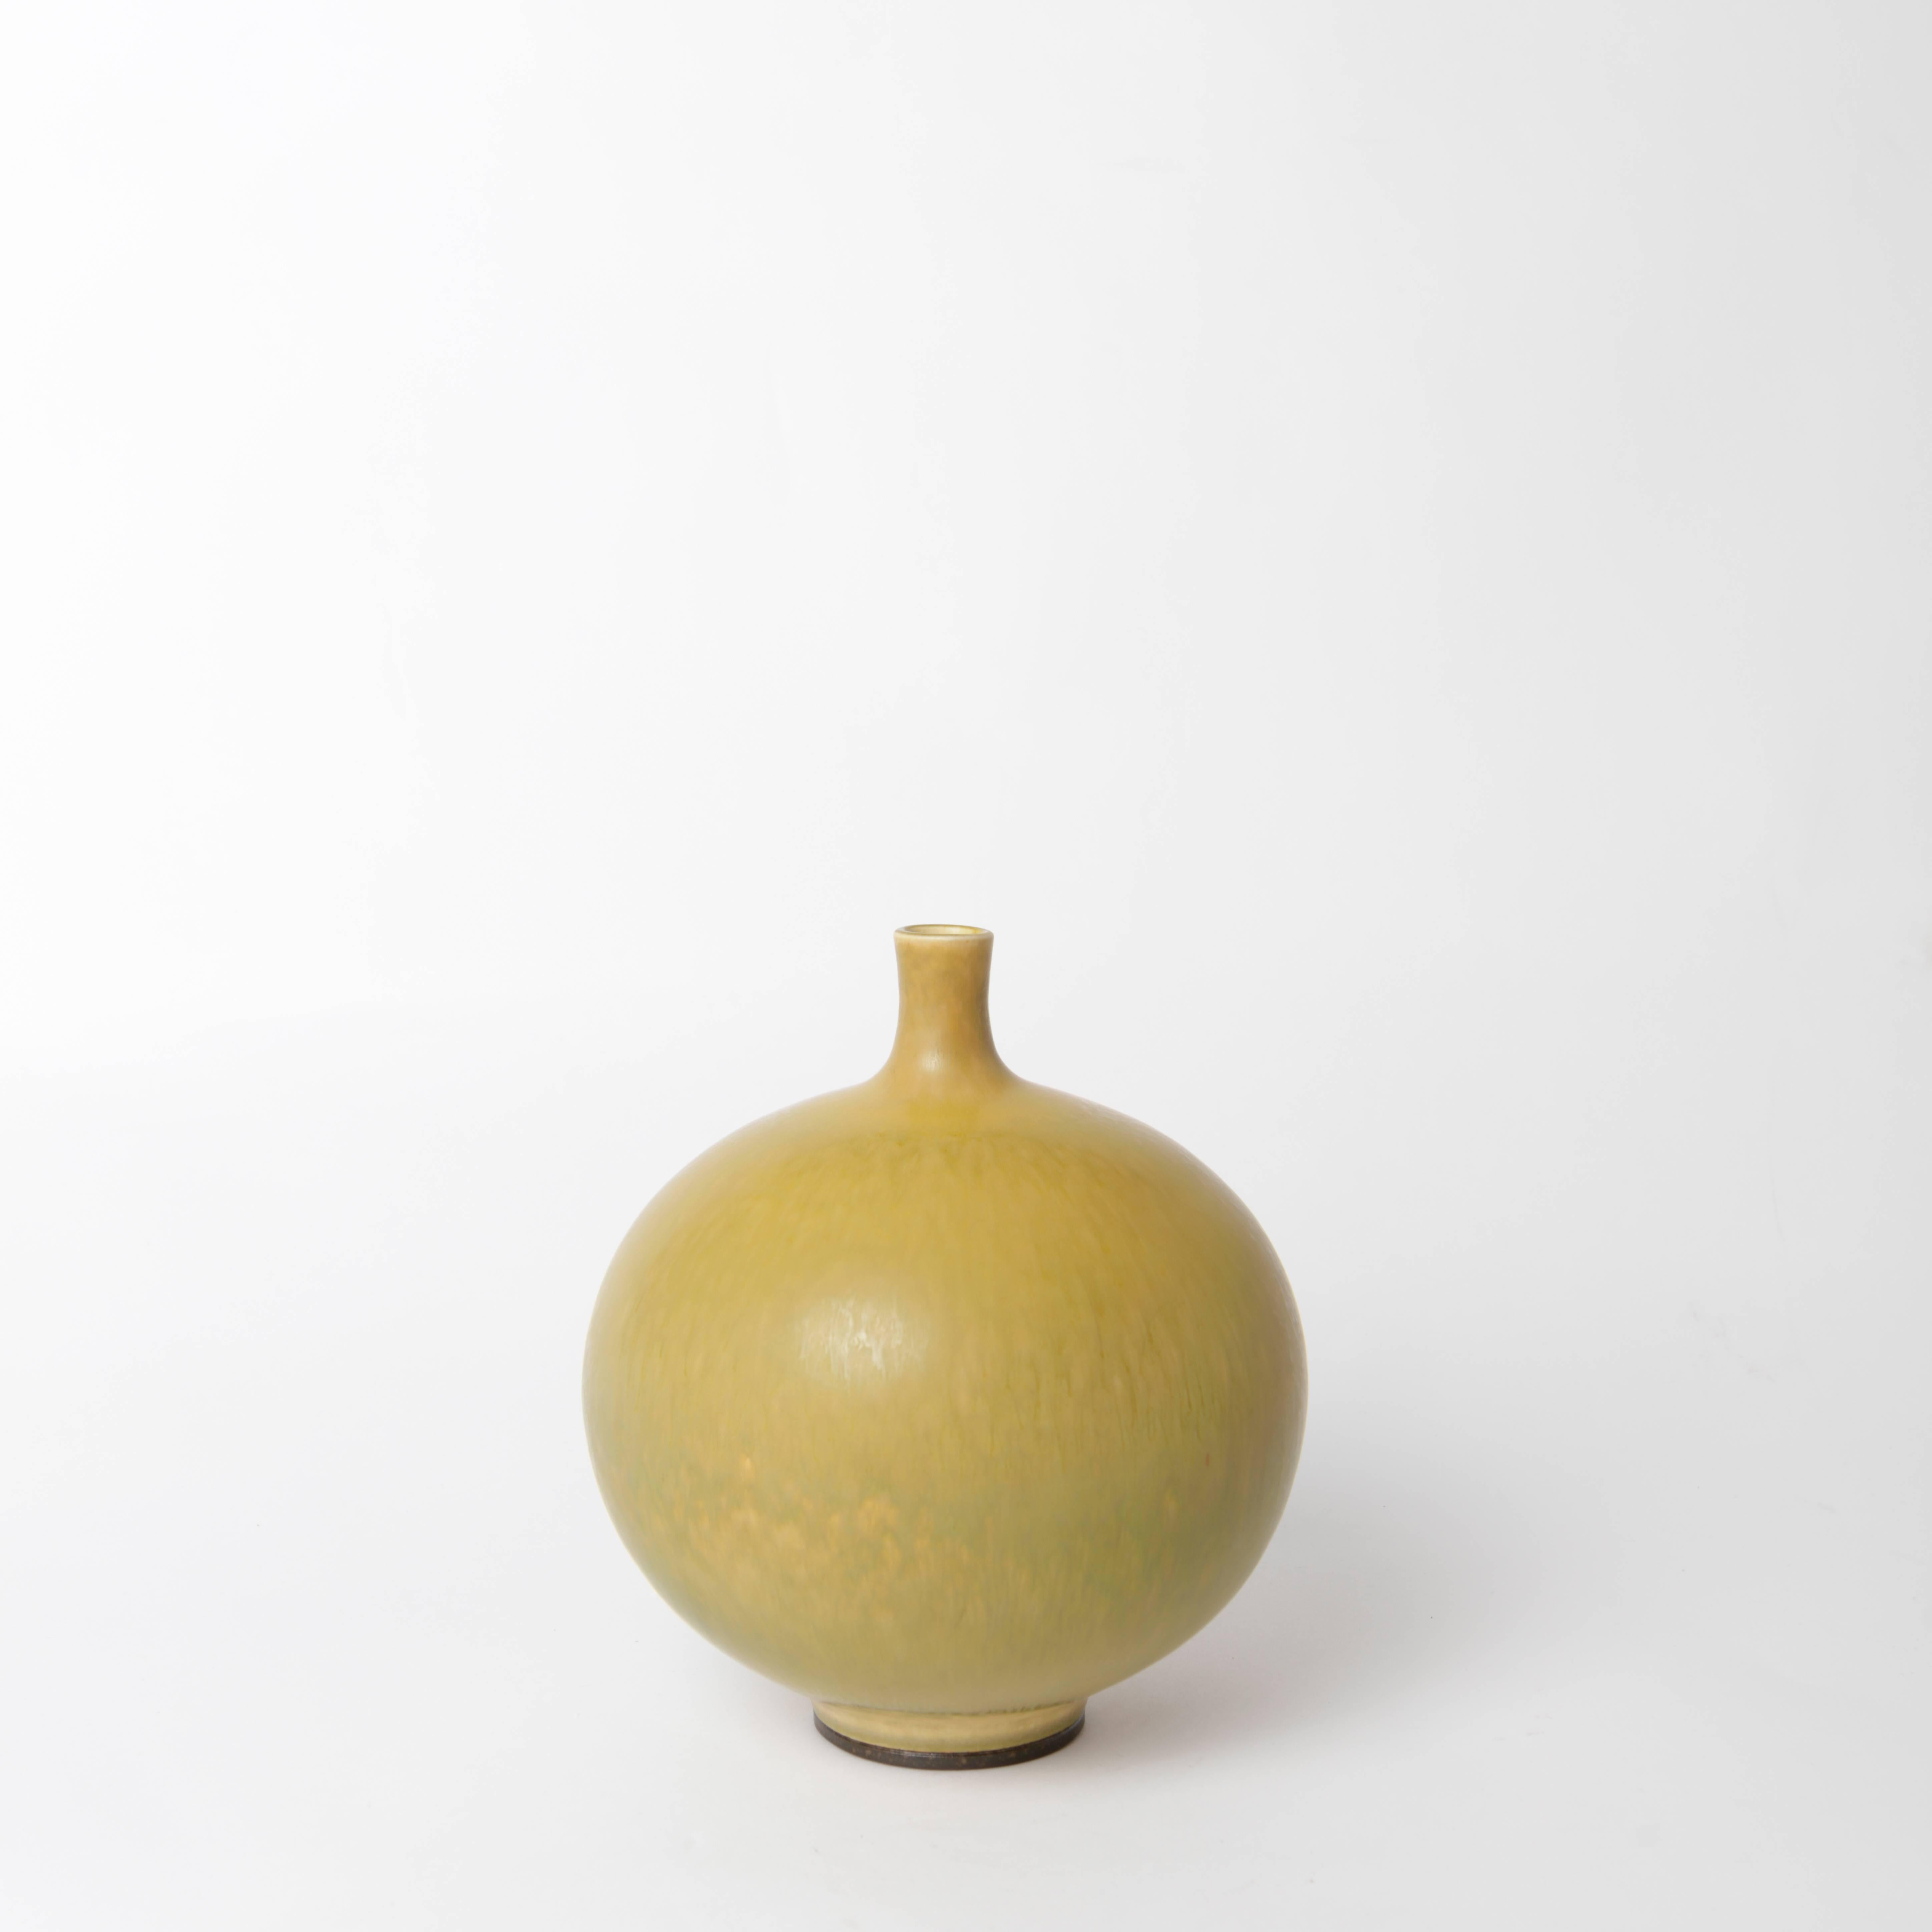 Unique stoneware vase by Berndt Friberg for Gustavsberg 1977 with harefur glaze.
Measure: Height 20 cm/7.9